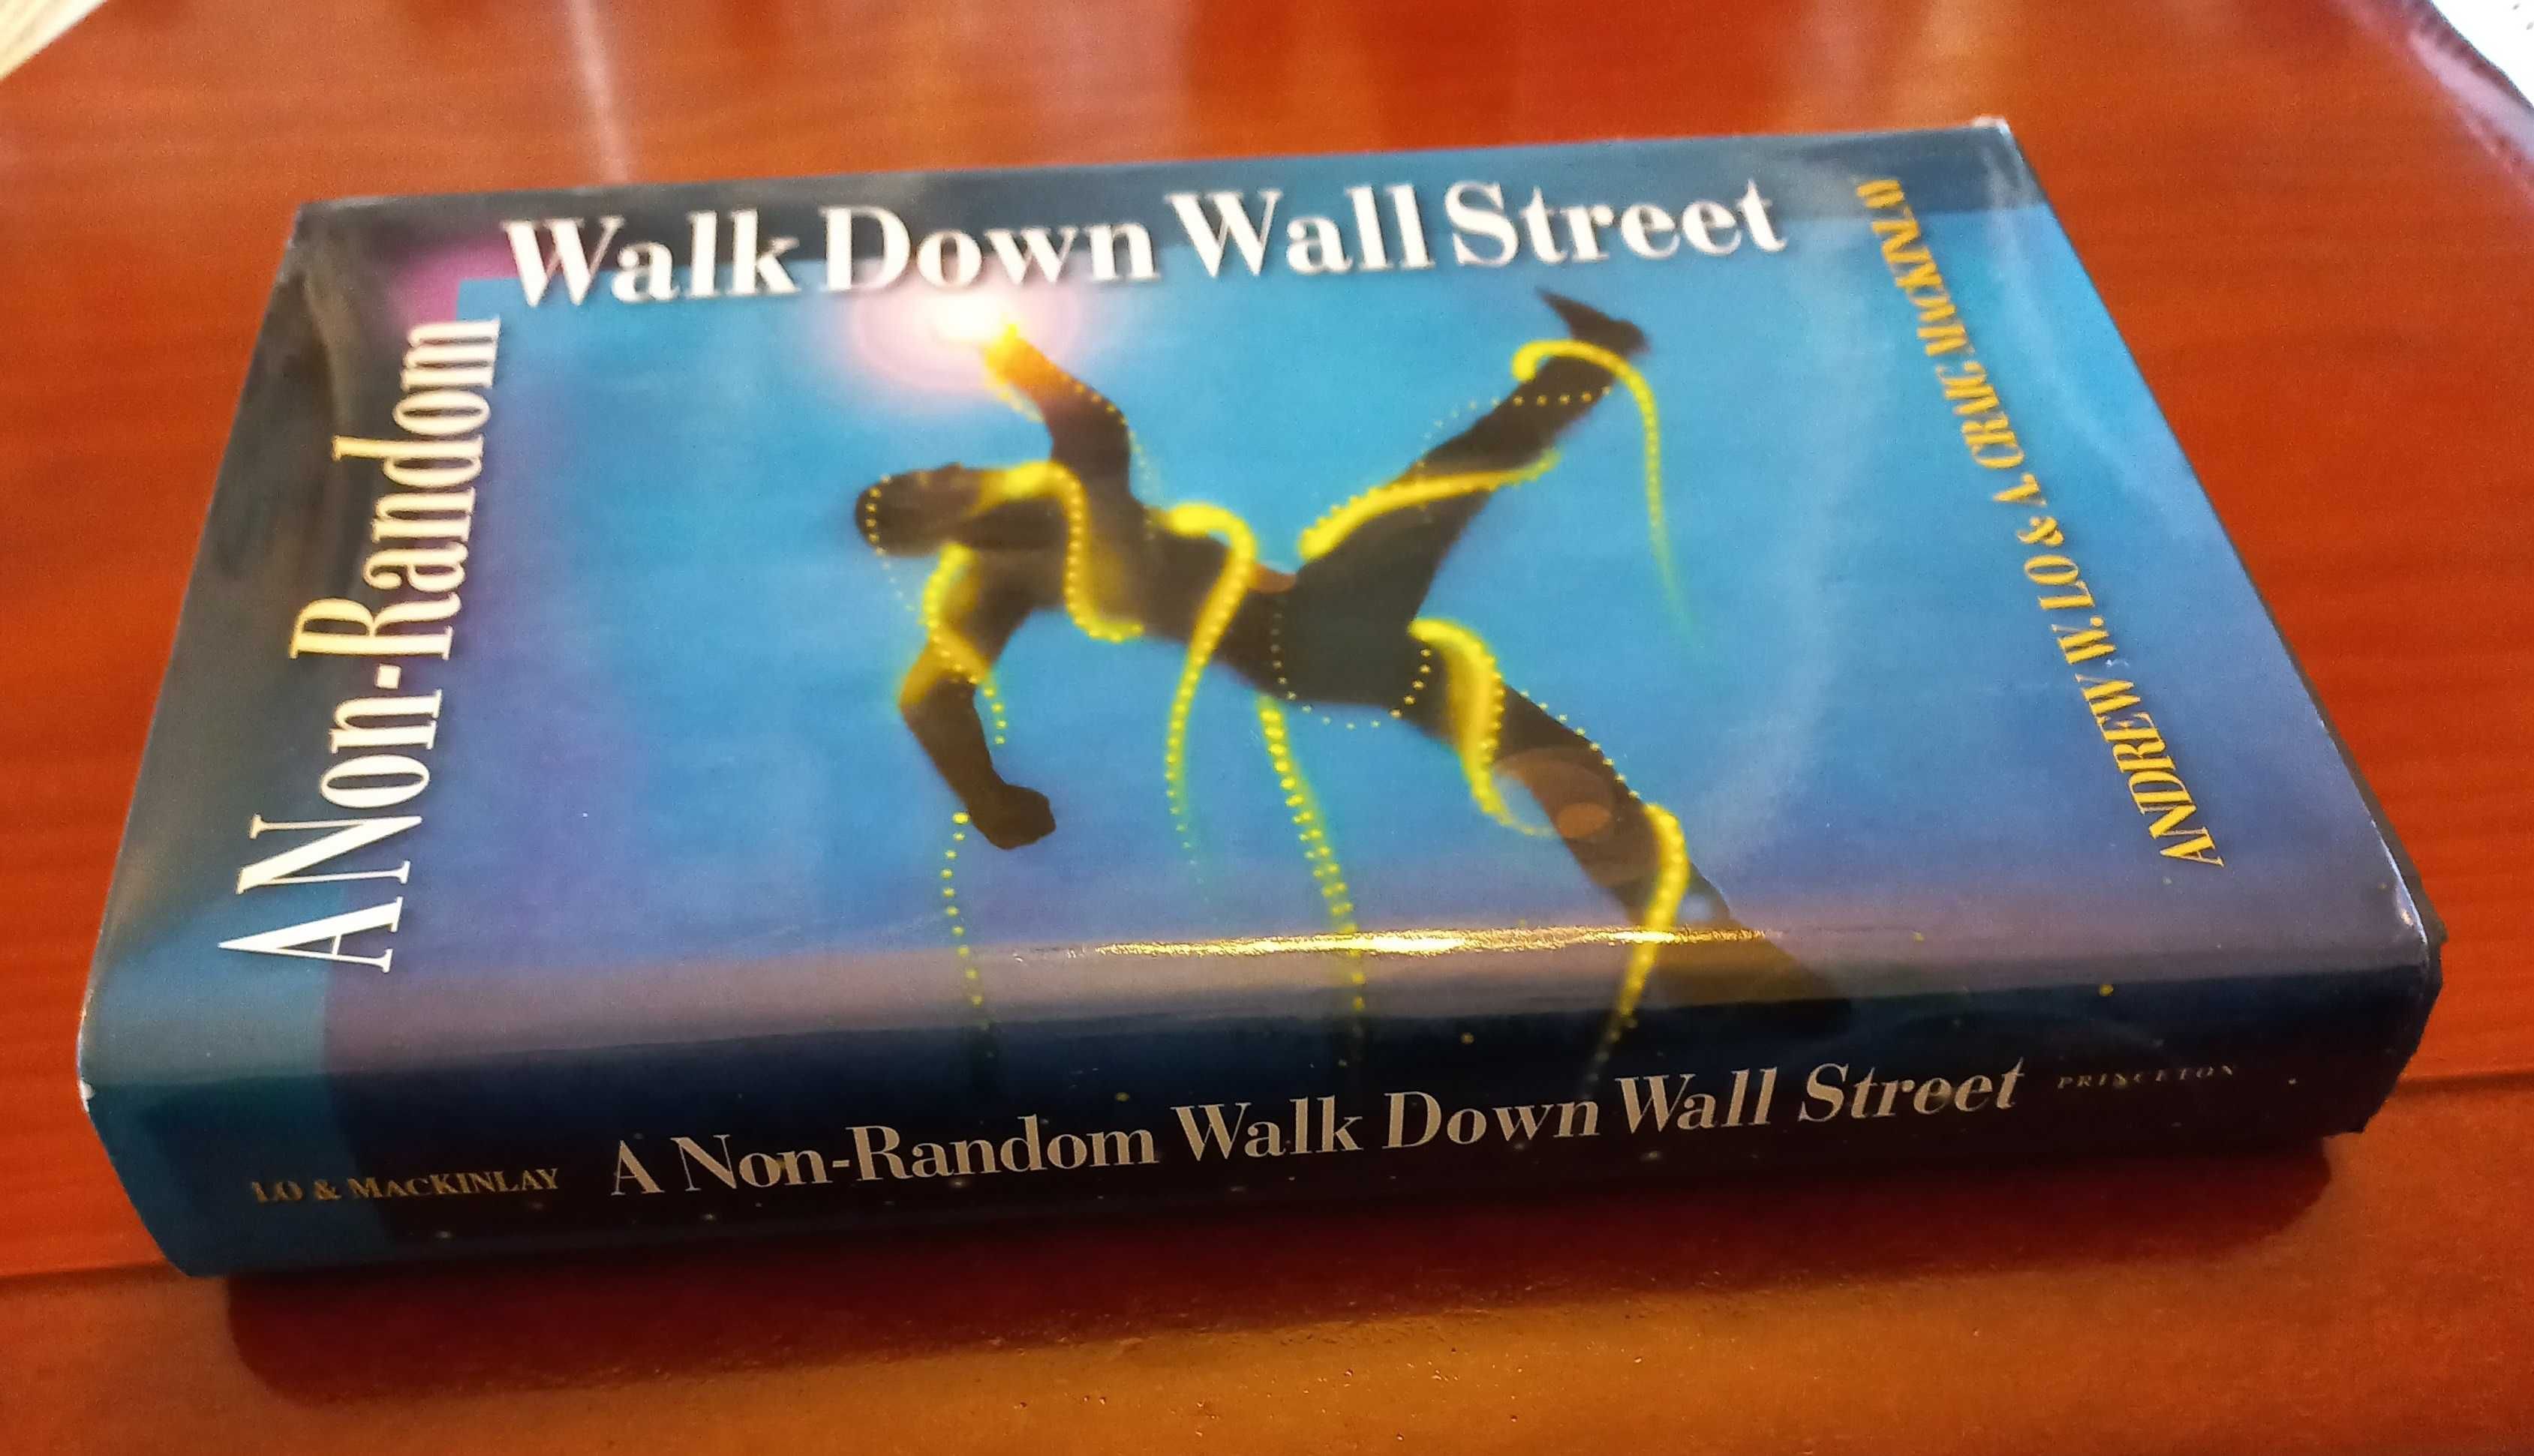 "A Non-Random Walk Down Wall Street" - Andrew Lo & A. C. MacKinlay